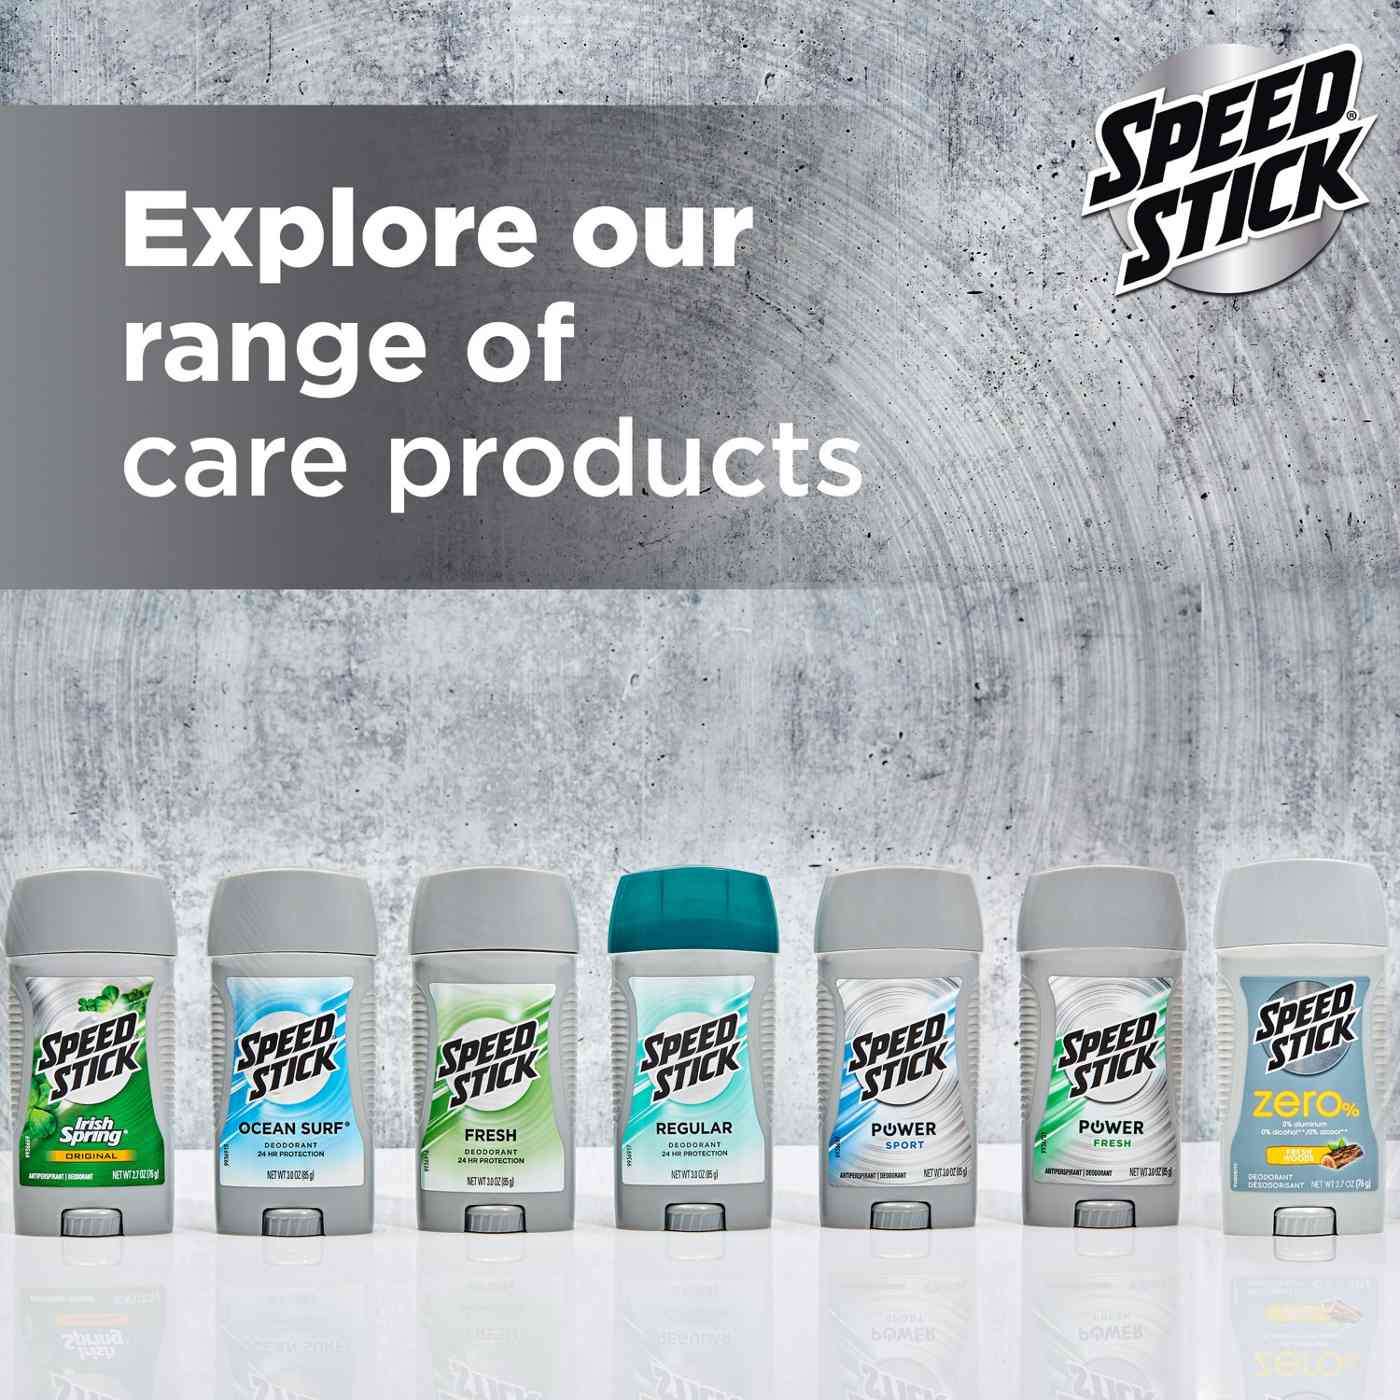 Speed Stick Power Ultimate Sport Antiperspirant & Deodorant; image 5 of 10